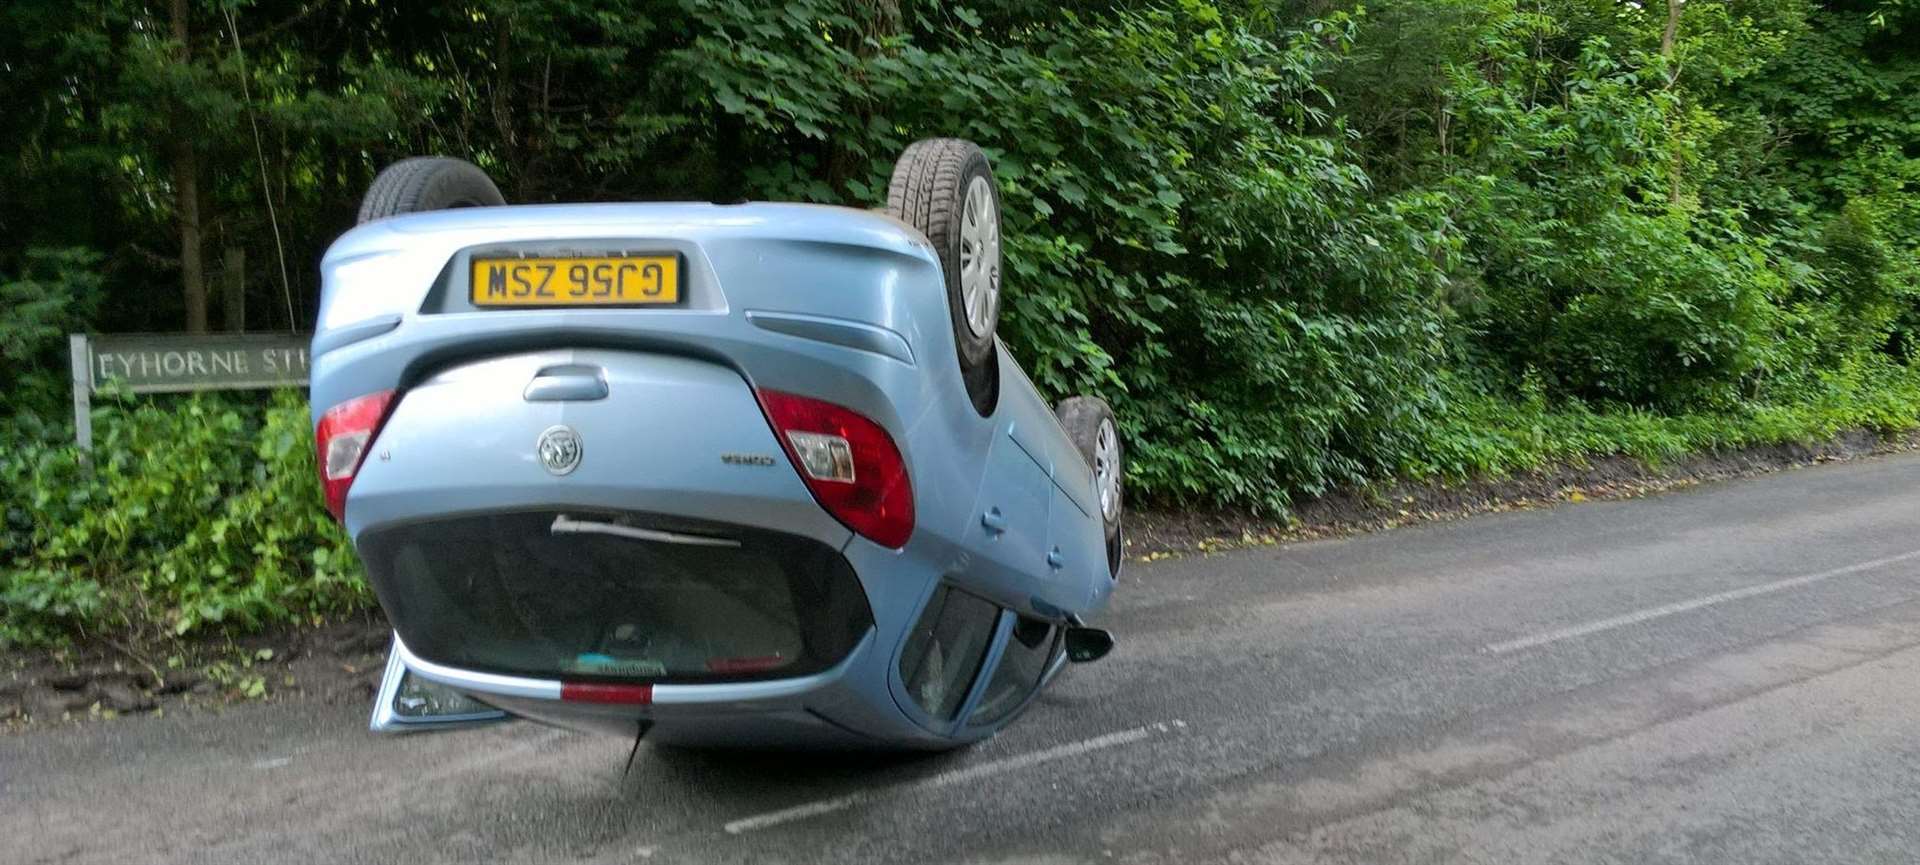 A car left upside down after a crash in Eyhorne Street in 2016